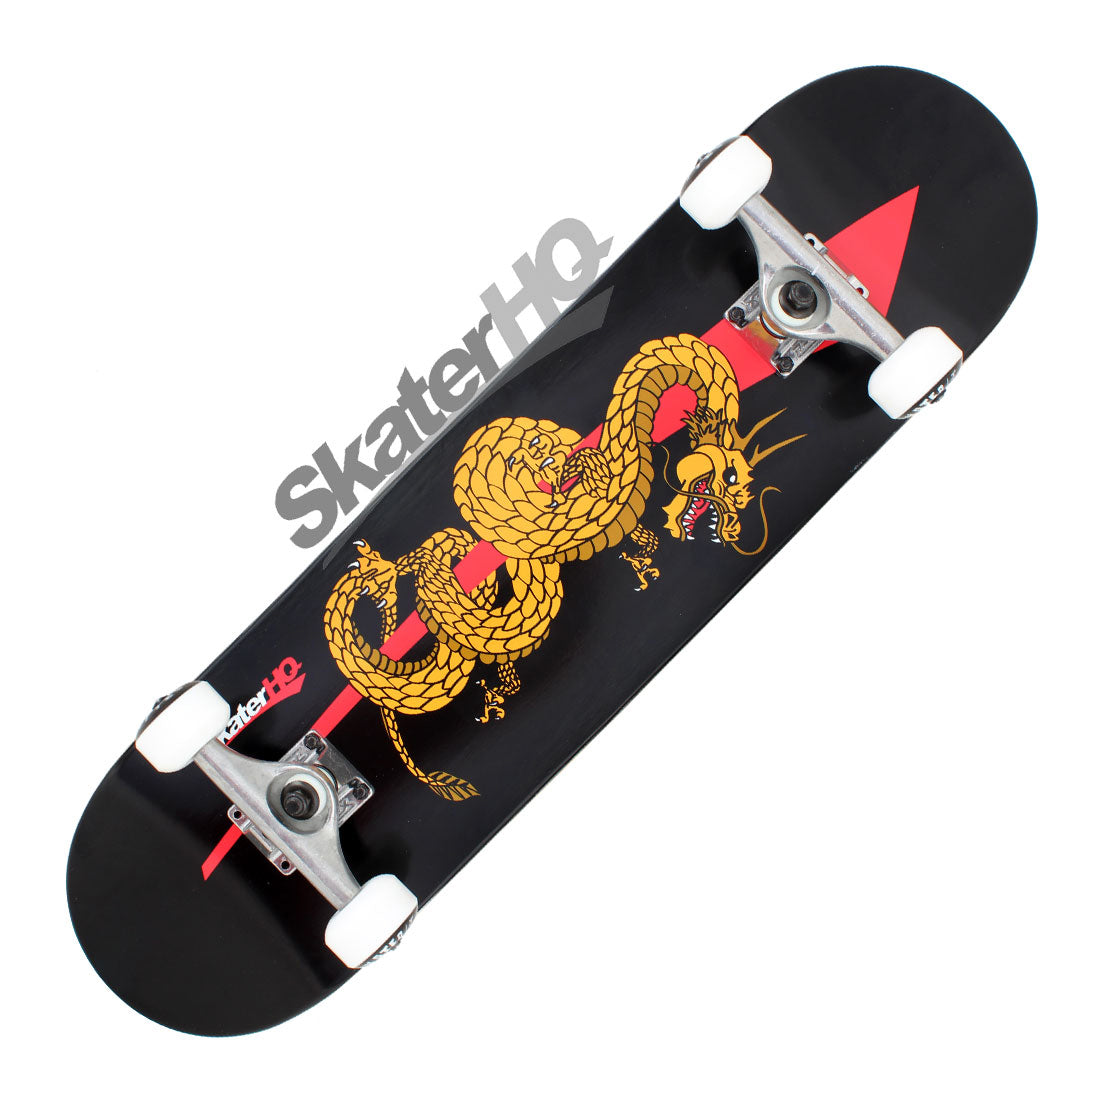 Skater HQ Swoosh Dragon 7.9 S Complete Skateboard Completes Modern Street